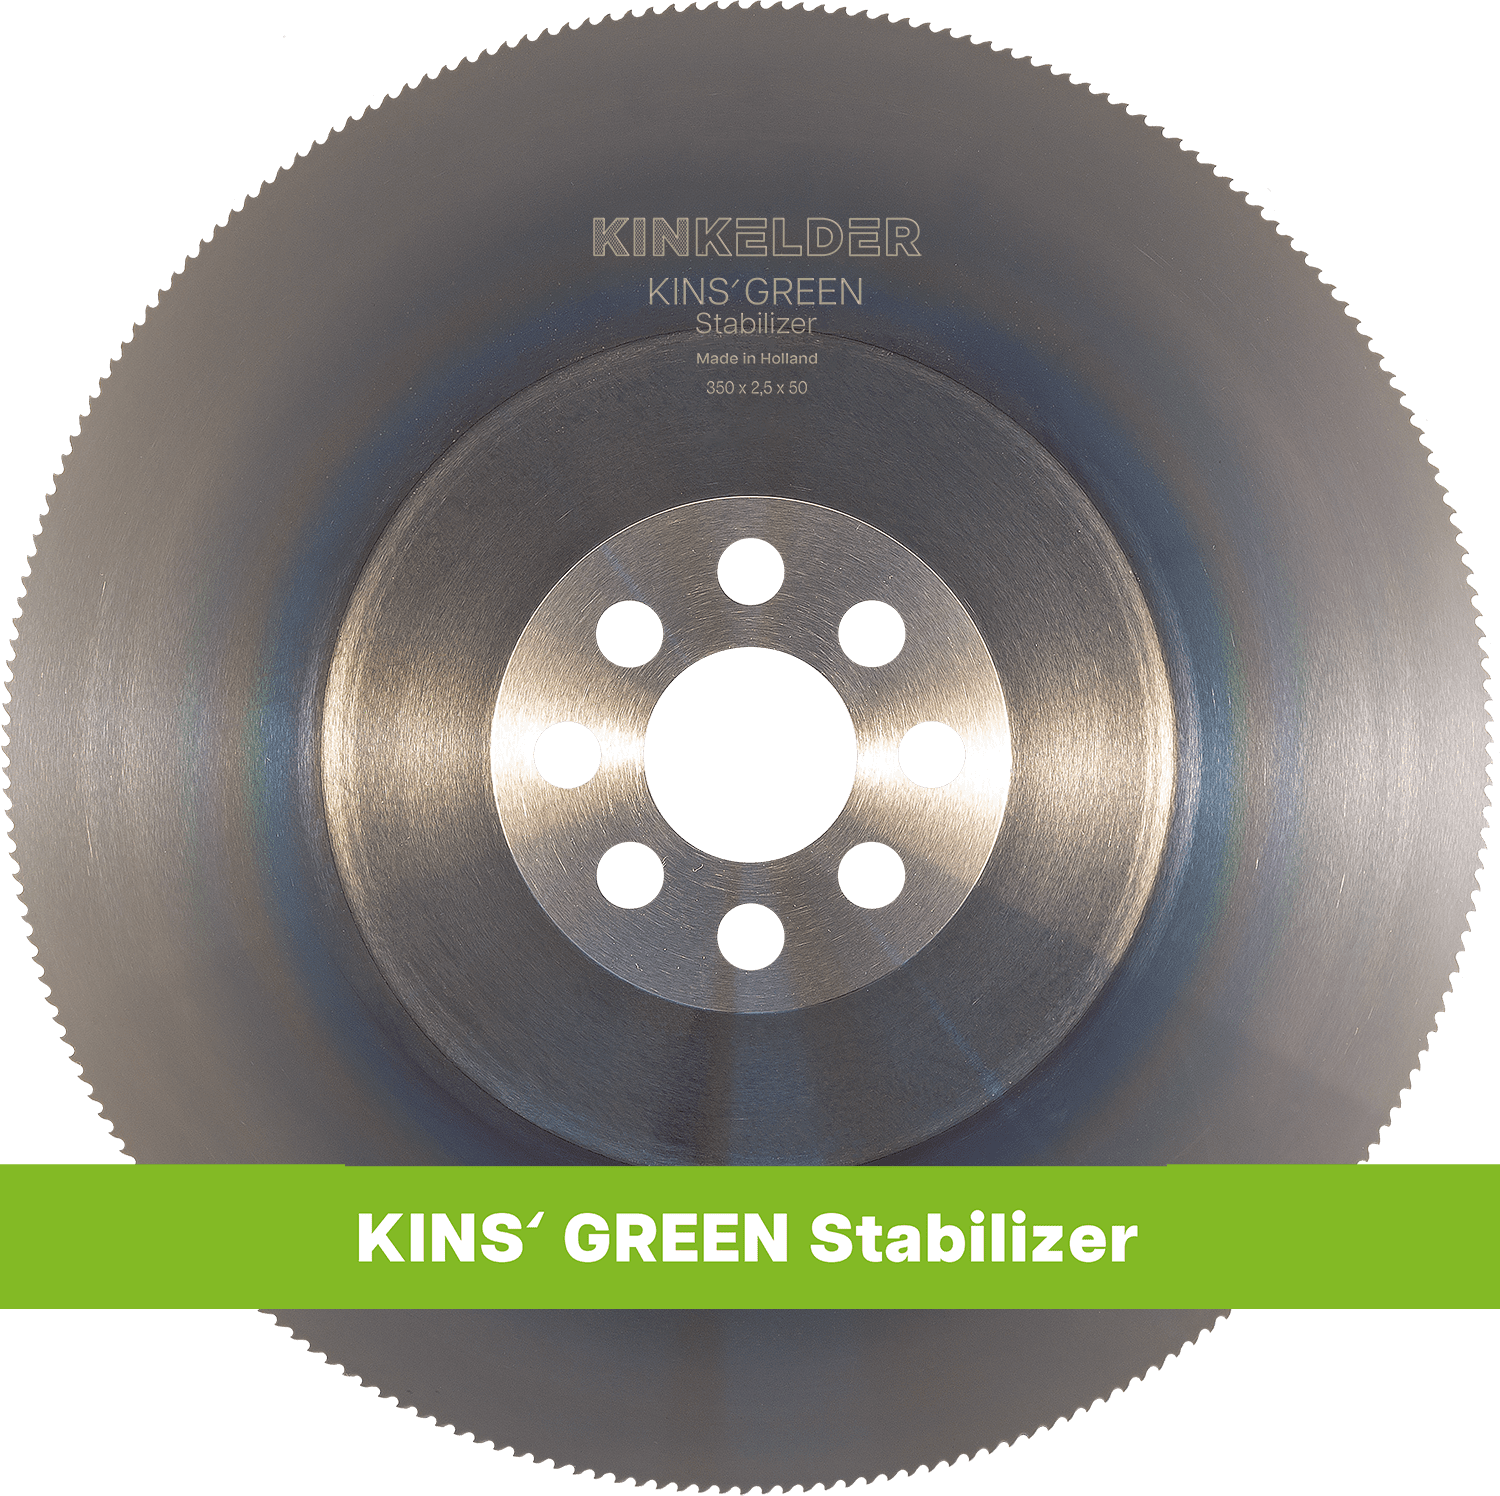 KINS' GREEN Stabilizer